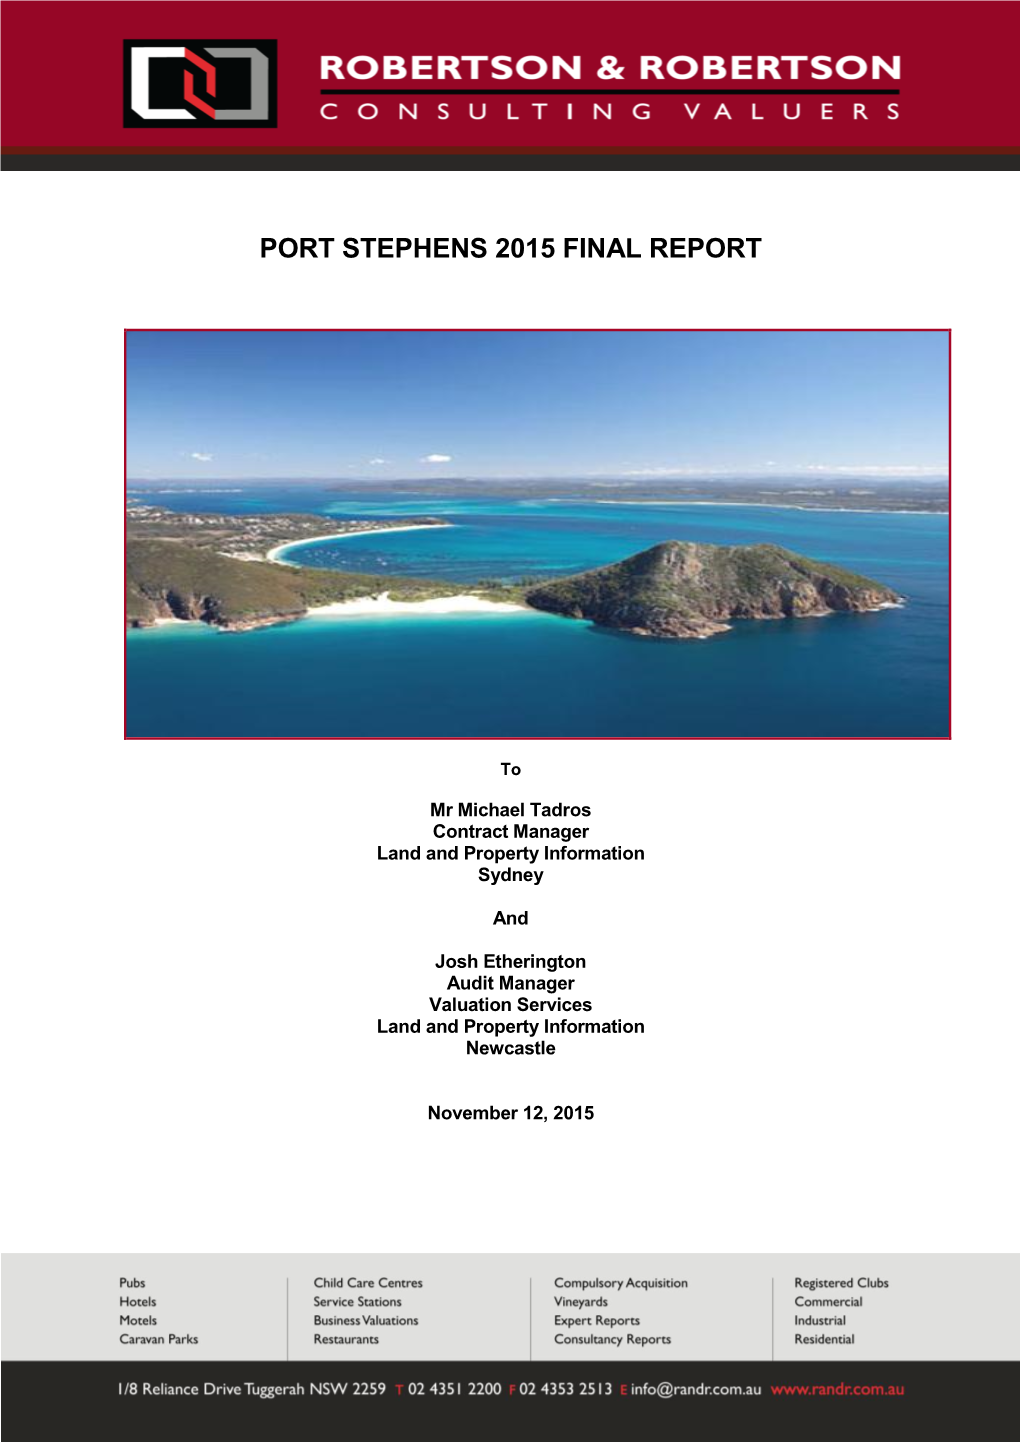 Port Stephens Final Report 2015